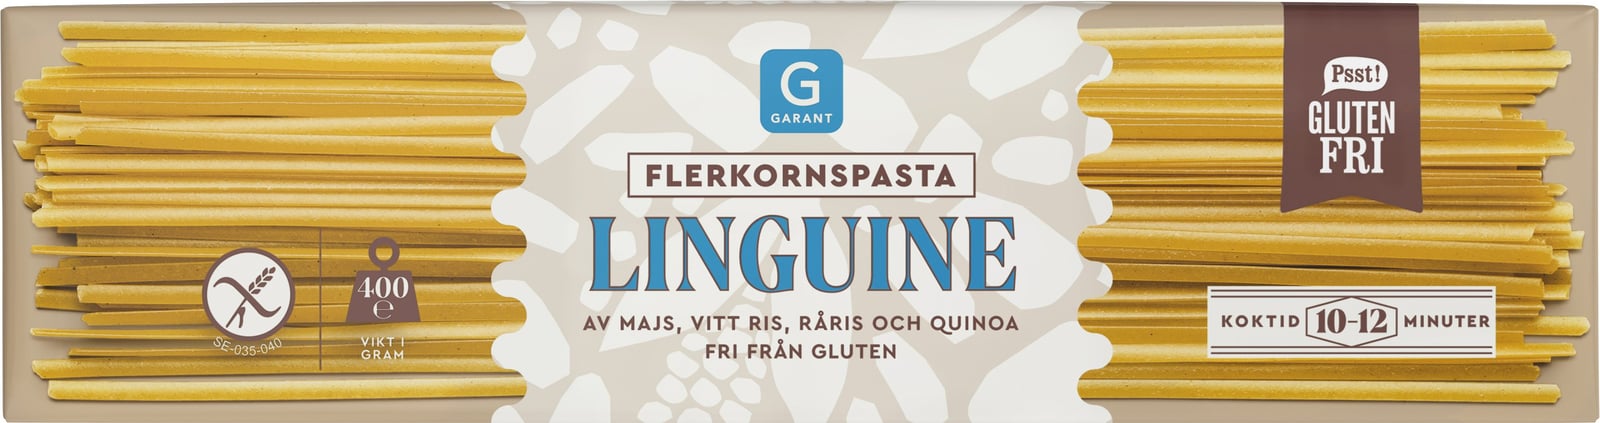 Garant Glutenfri Linguine Flerkornspasta 400 g